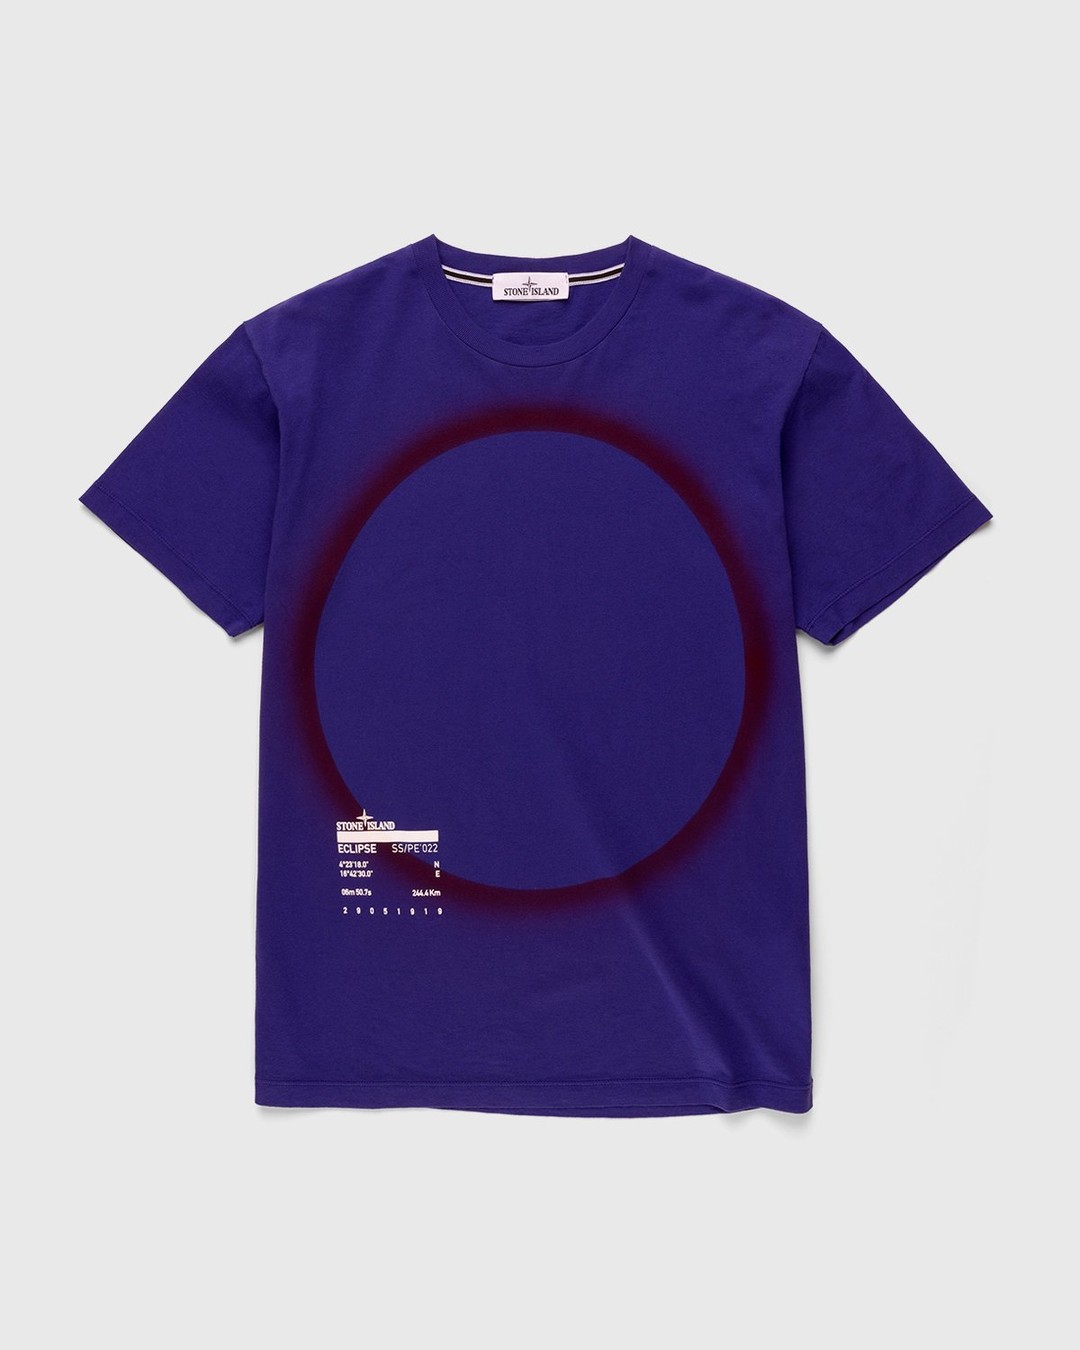 Stone Island – 2NS95 Garment-Dyed Solar Eclipse One T-Shirt Bright Blue - T-Shirts - Blue - Image 1